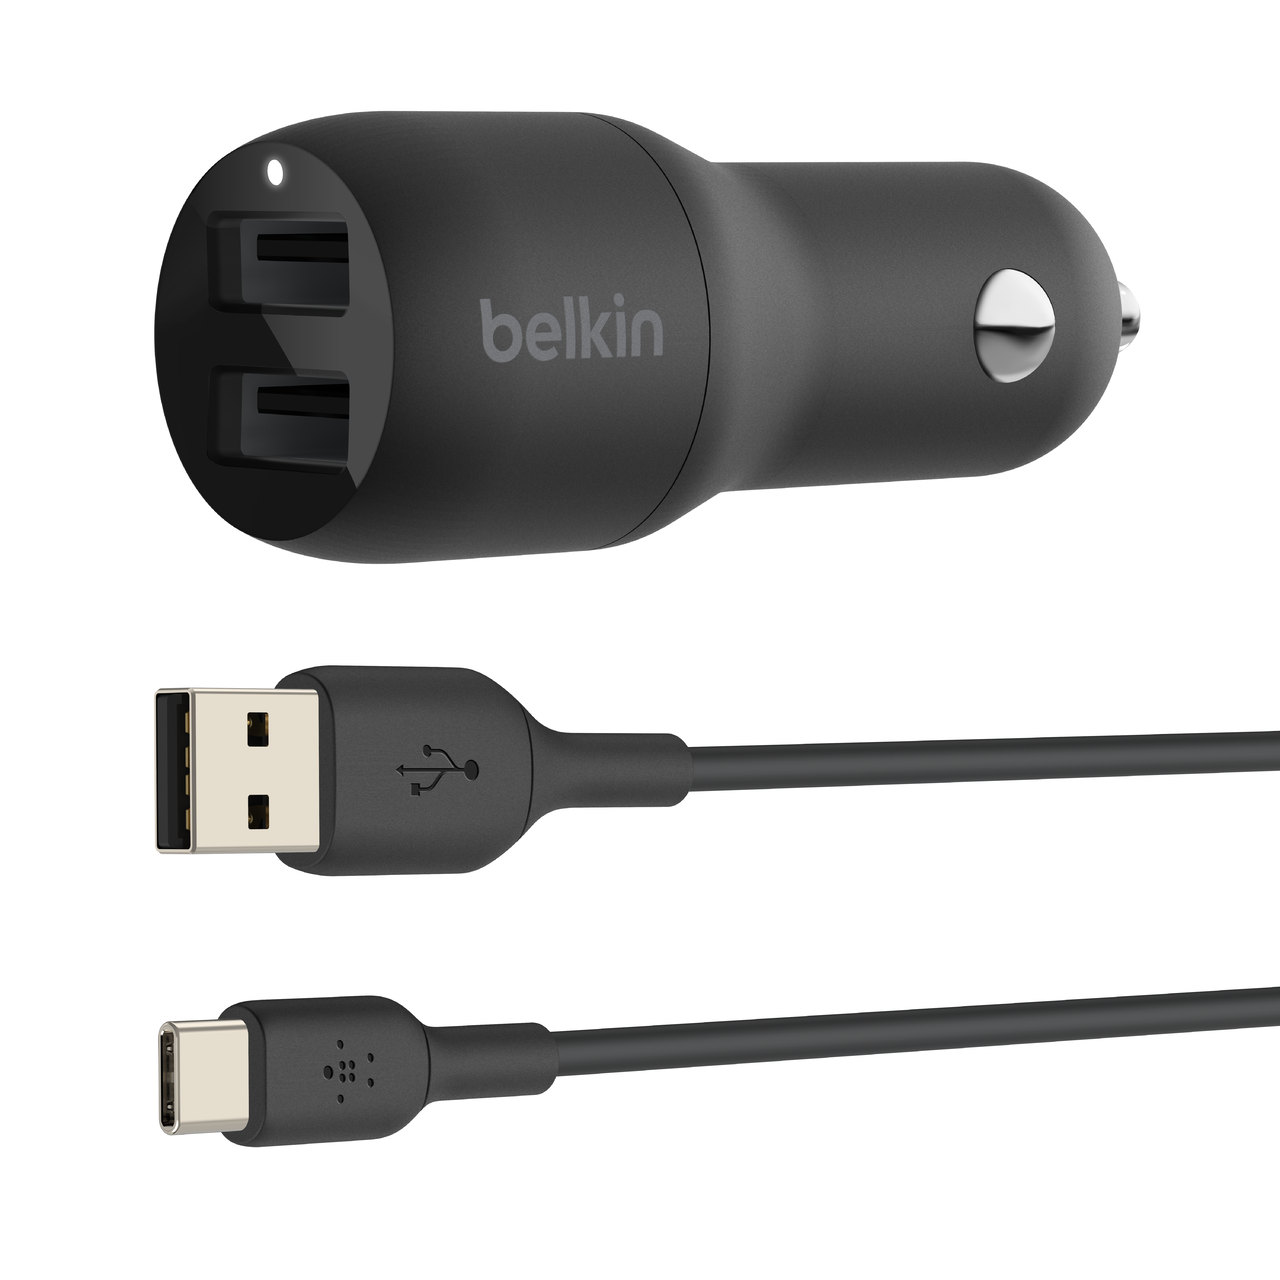 Belkin ORIGINAL Belkin USB KFZ Auto Ladegerät Ladekabel für iPod iPhone 4 4s 3G 3GS 